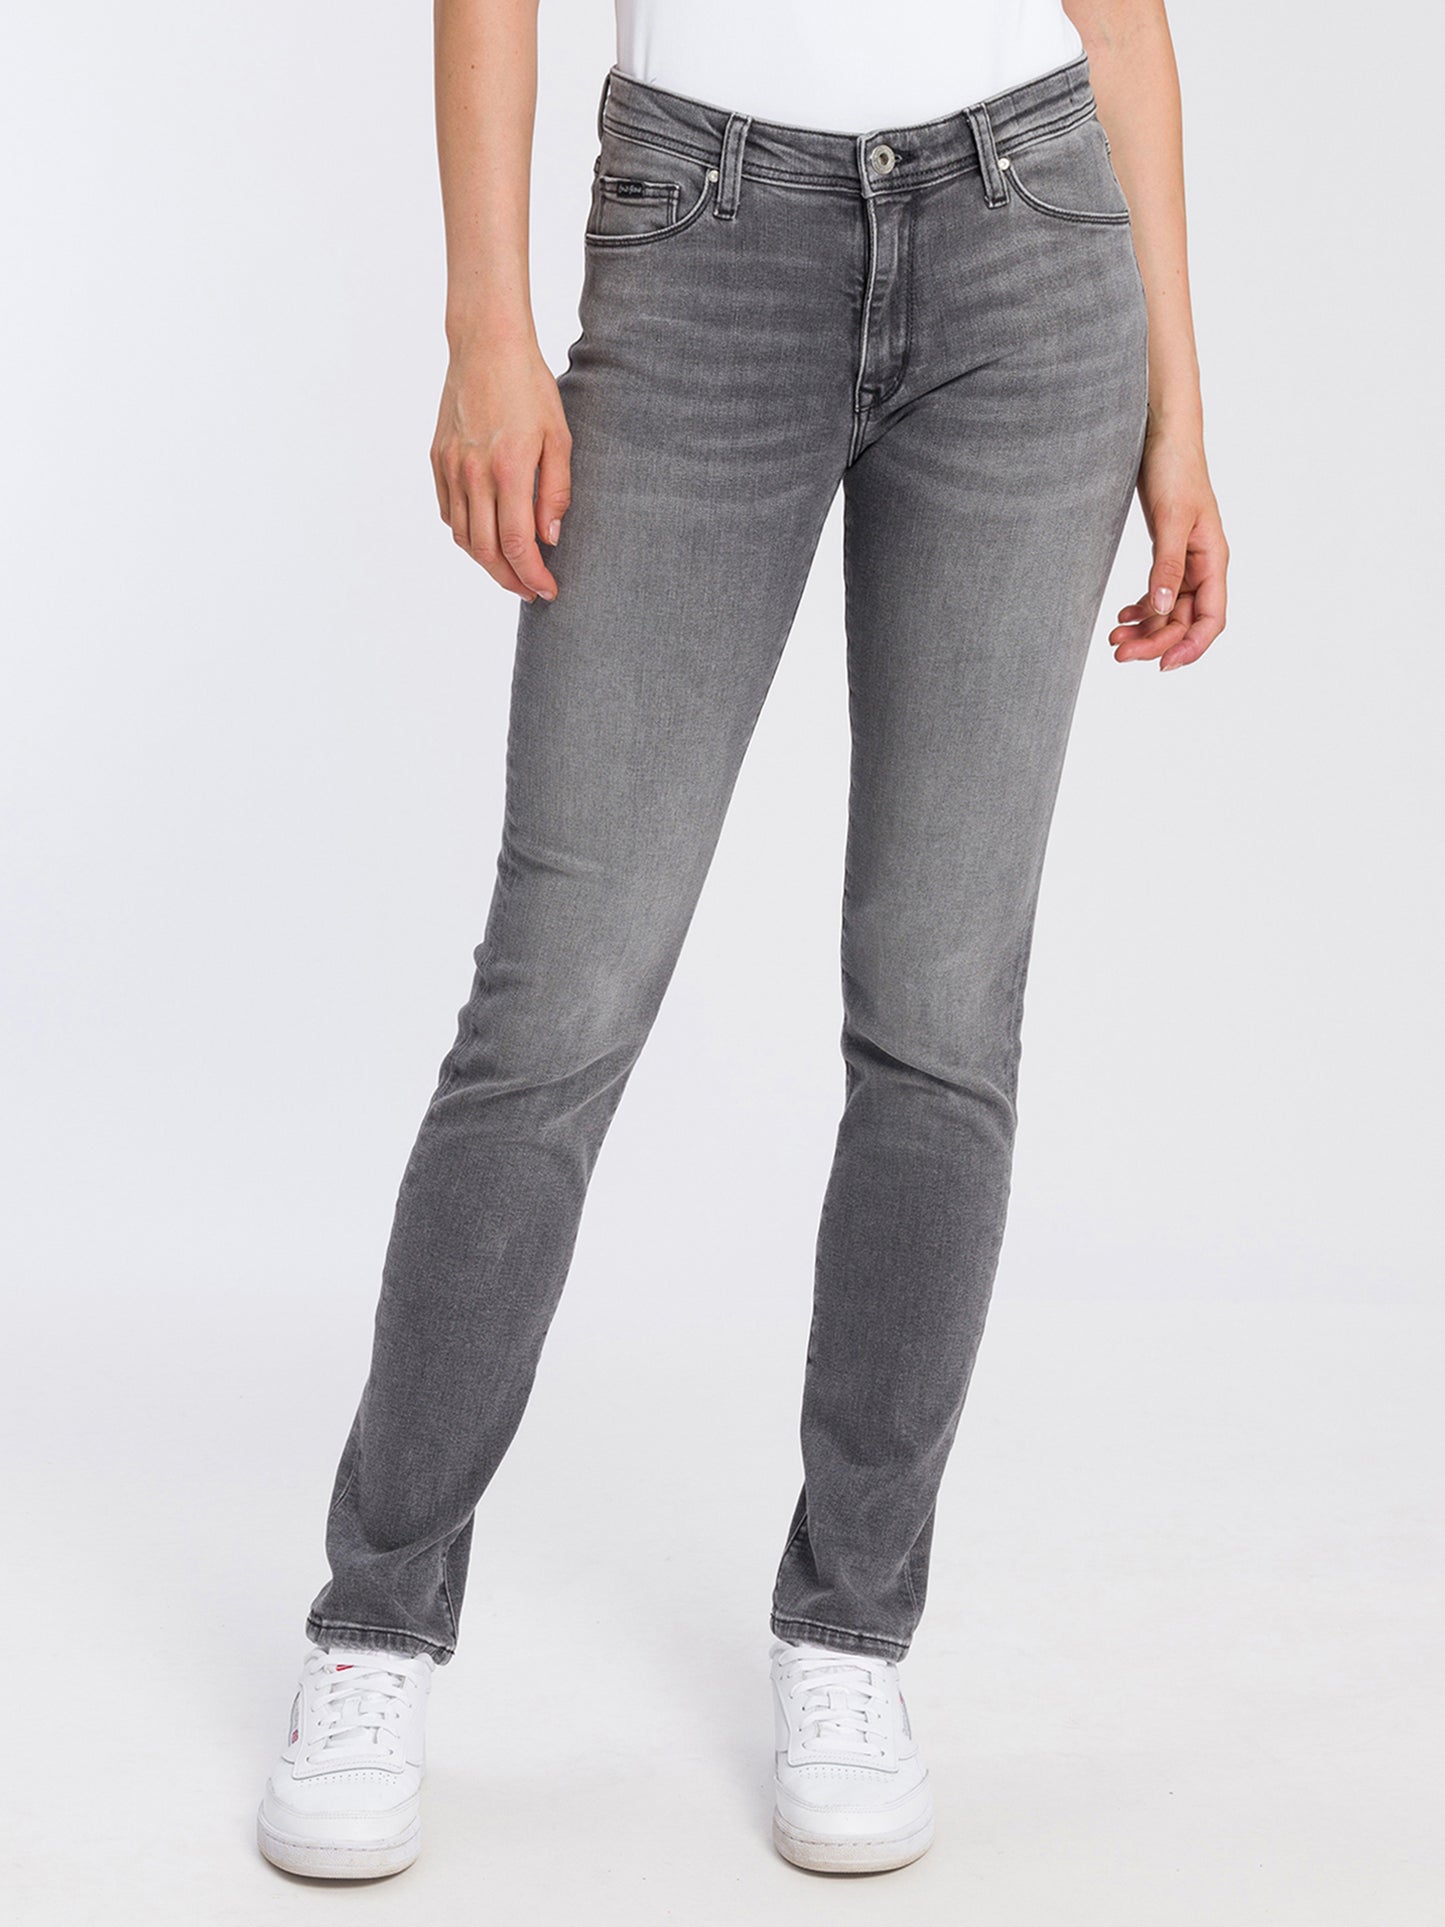 Anya women's jeans slim fit high waist grey